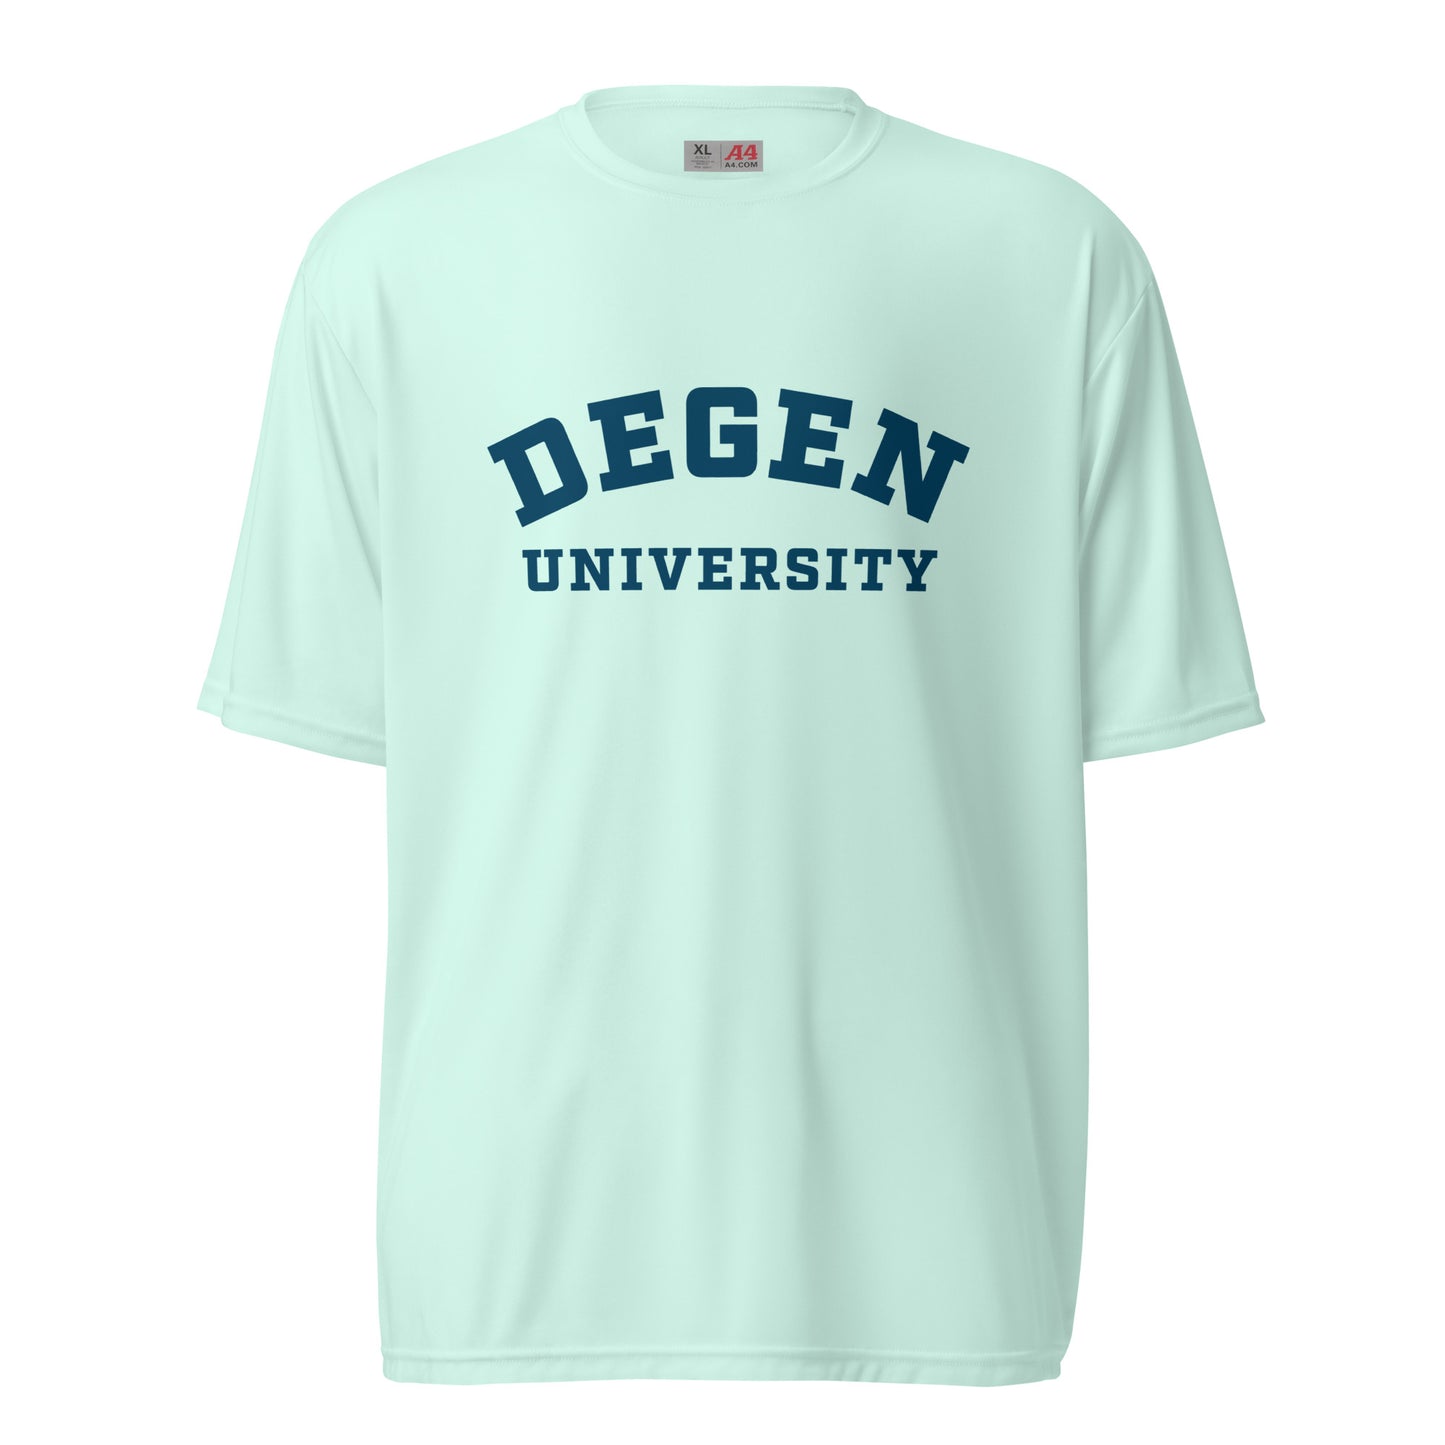 Degen University - Unisex performance crew neck t-shirt